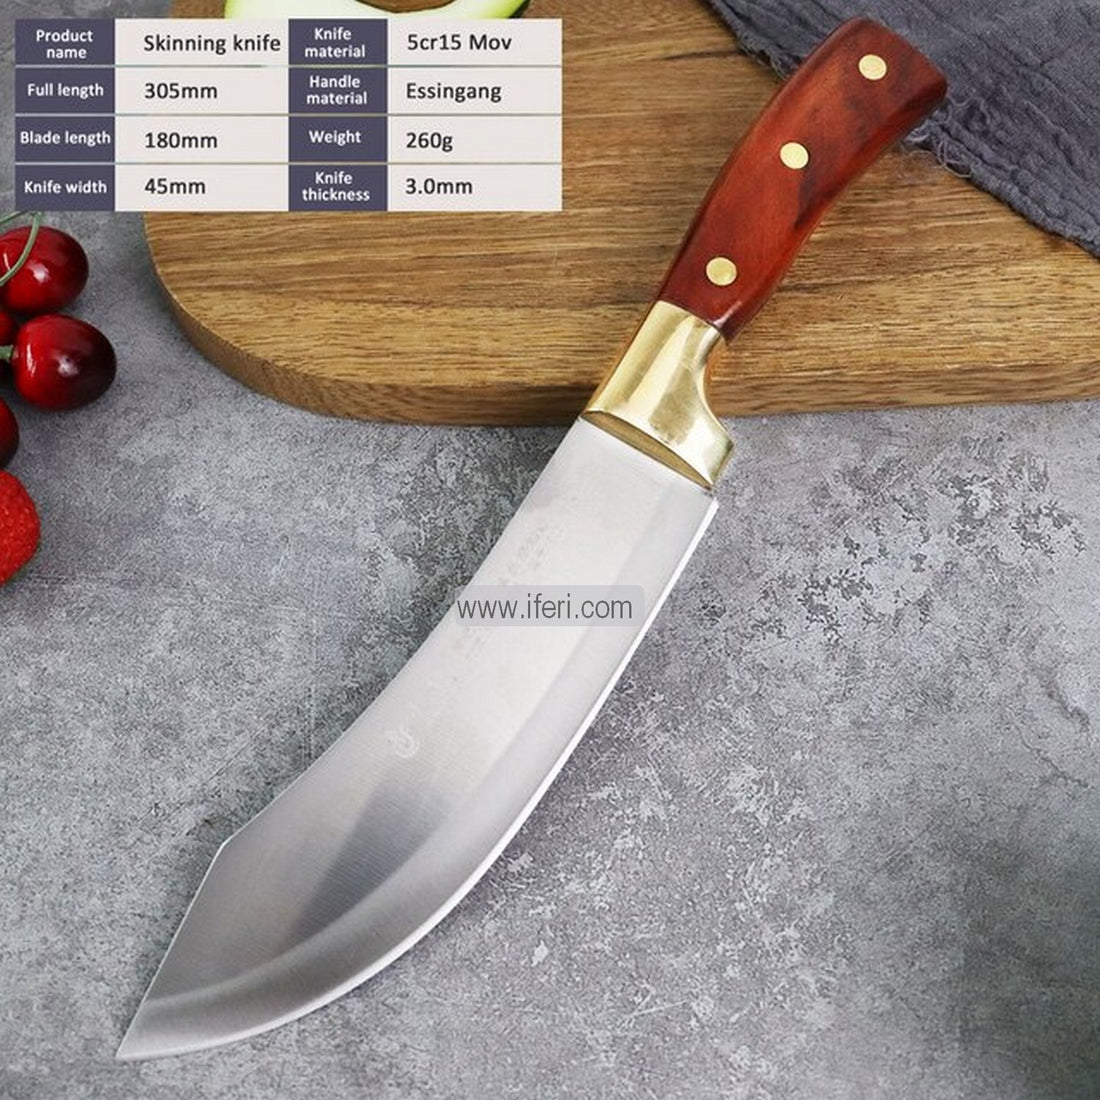 12 Inch Stainless Steel Skinning Knife RR1650